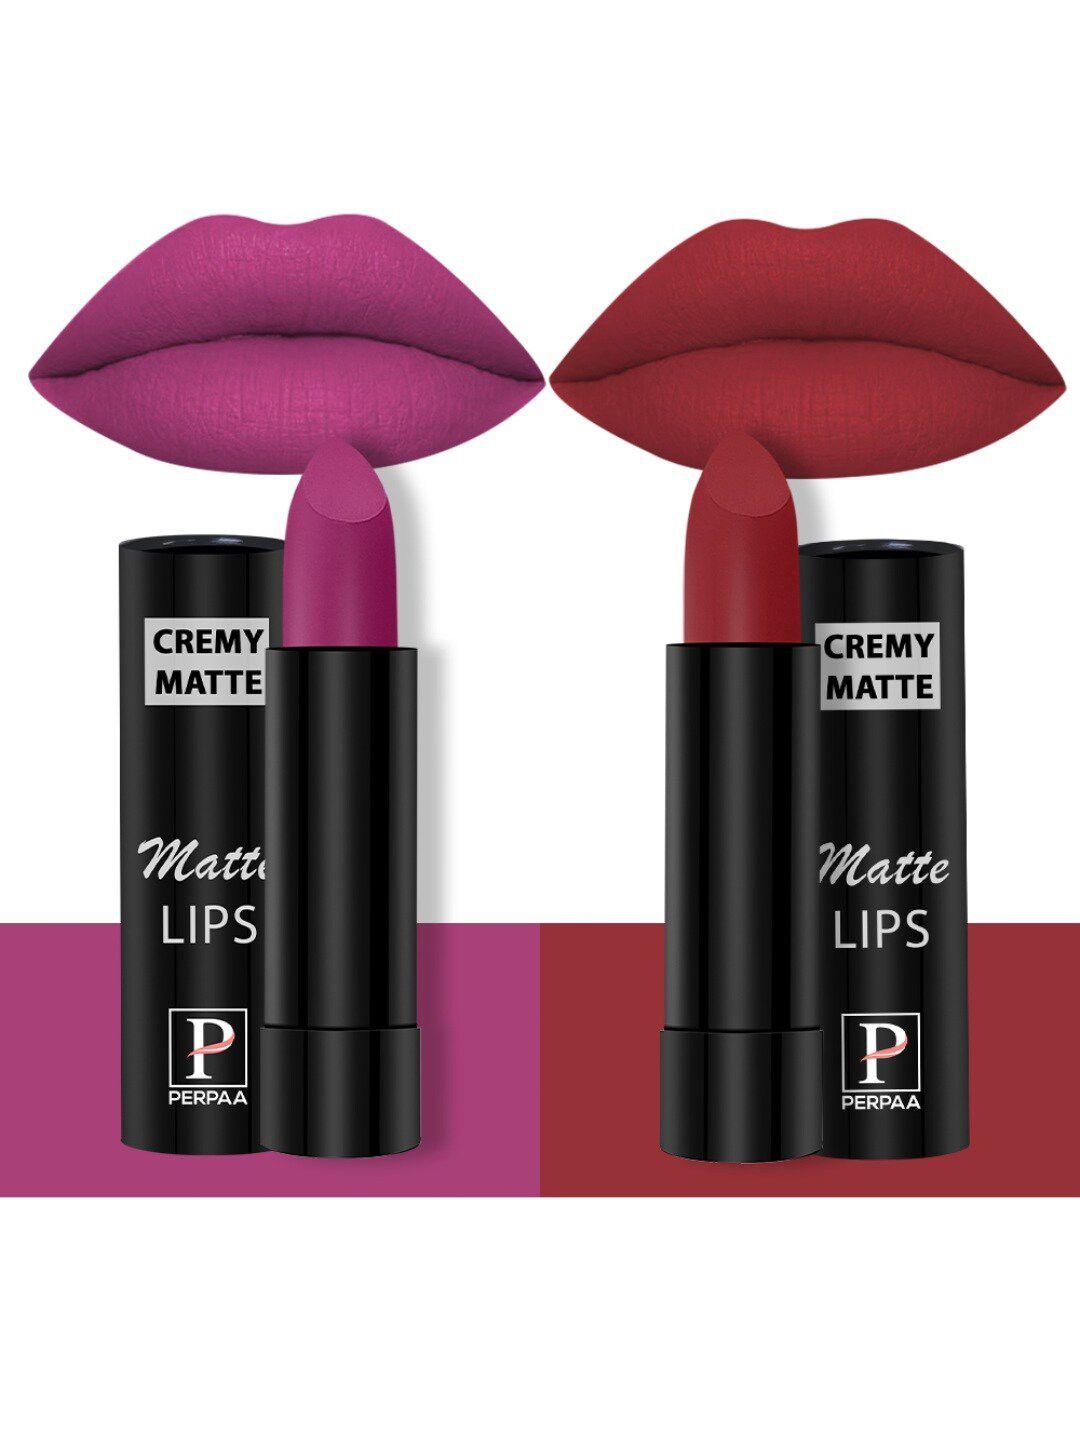 perpaa set of 2 creamy matte bullet lipstick 3.5g each - rose magenta 58 & crimson red 86